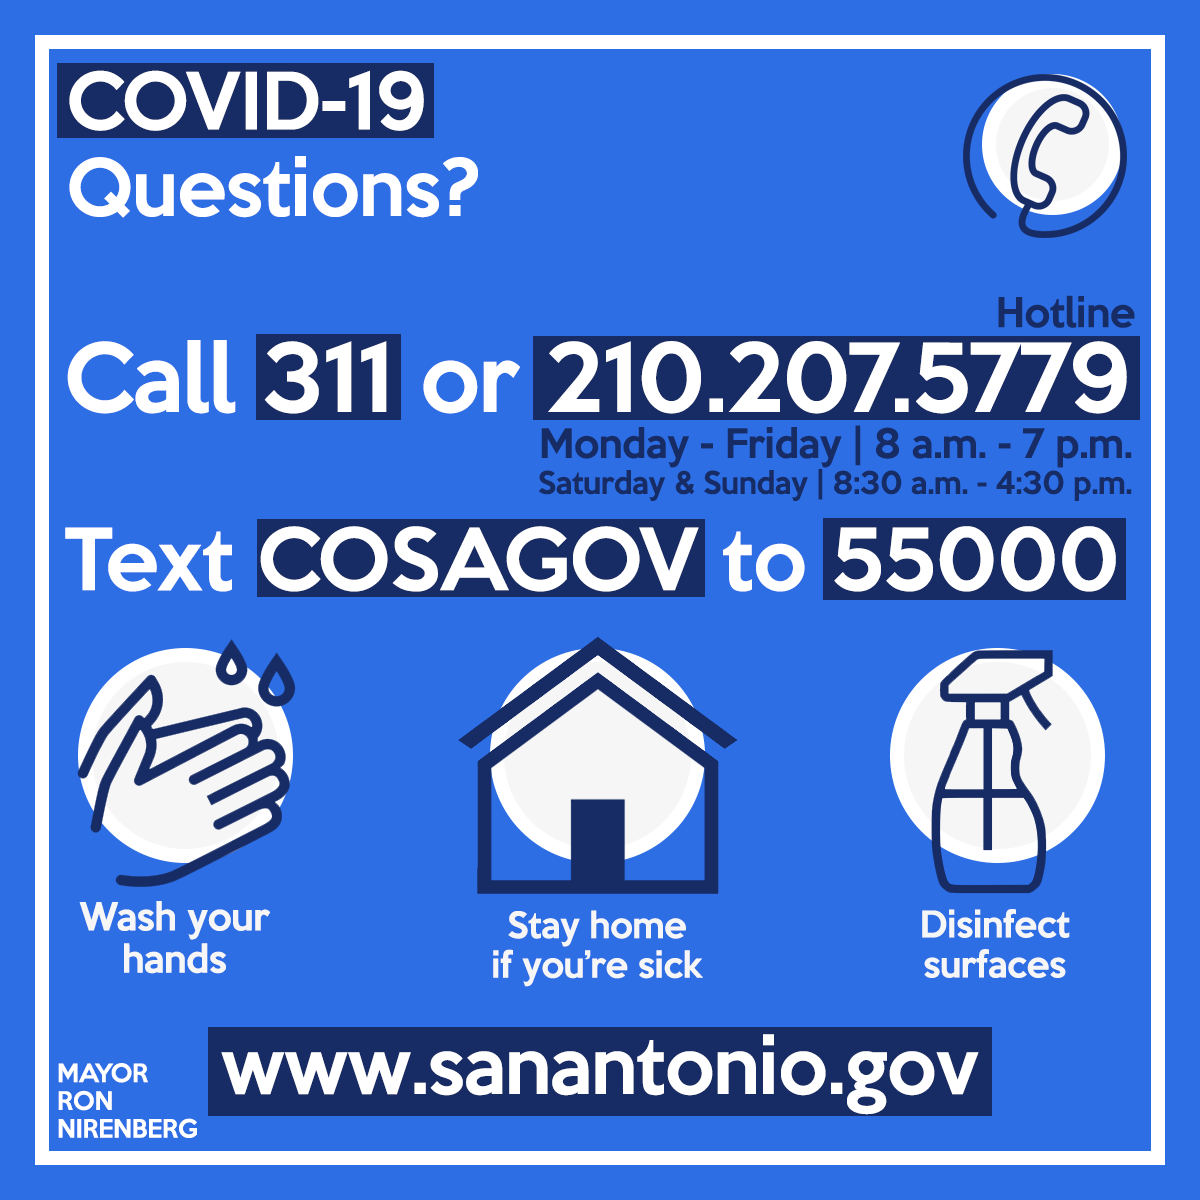 COMMUNICATION PORTALS:San Antonio COVID-19 website: https://sanantonio.gov/Health/News/Alerts/CoronaVirusAmerican Sign Language: http://sat.ahasalerts.com/ActiveAlerts.aspx?id=1334COVID-19 Hotline: 210.207.5779Text COSAGOV to 55000 for text alertsReady South Texas app: https://readysouthtexasapp.com 15/16